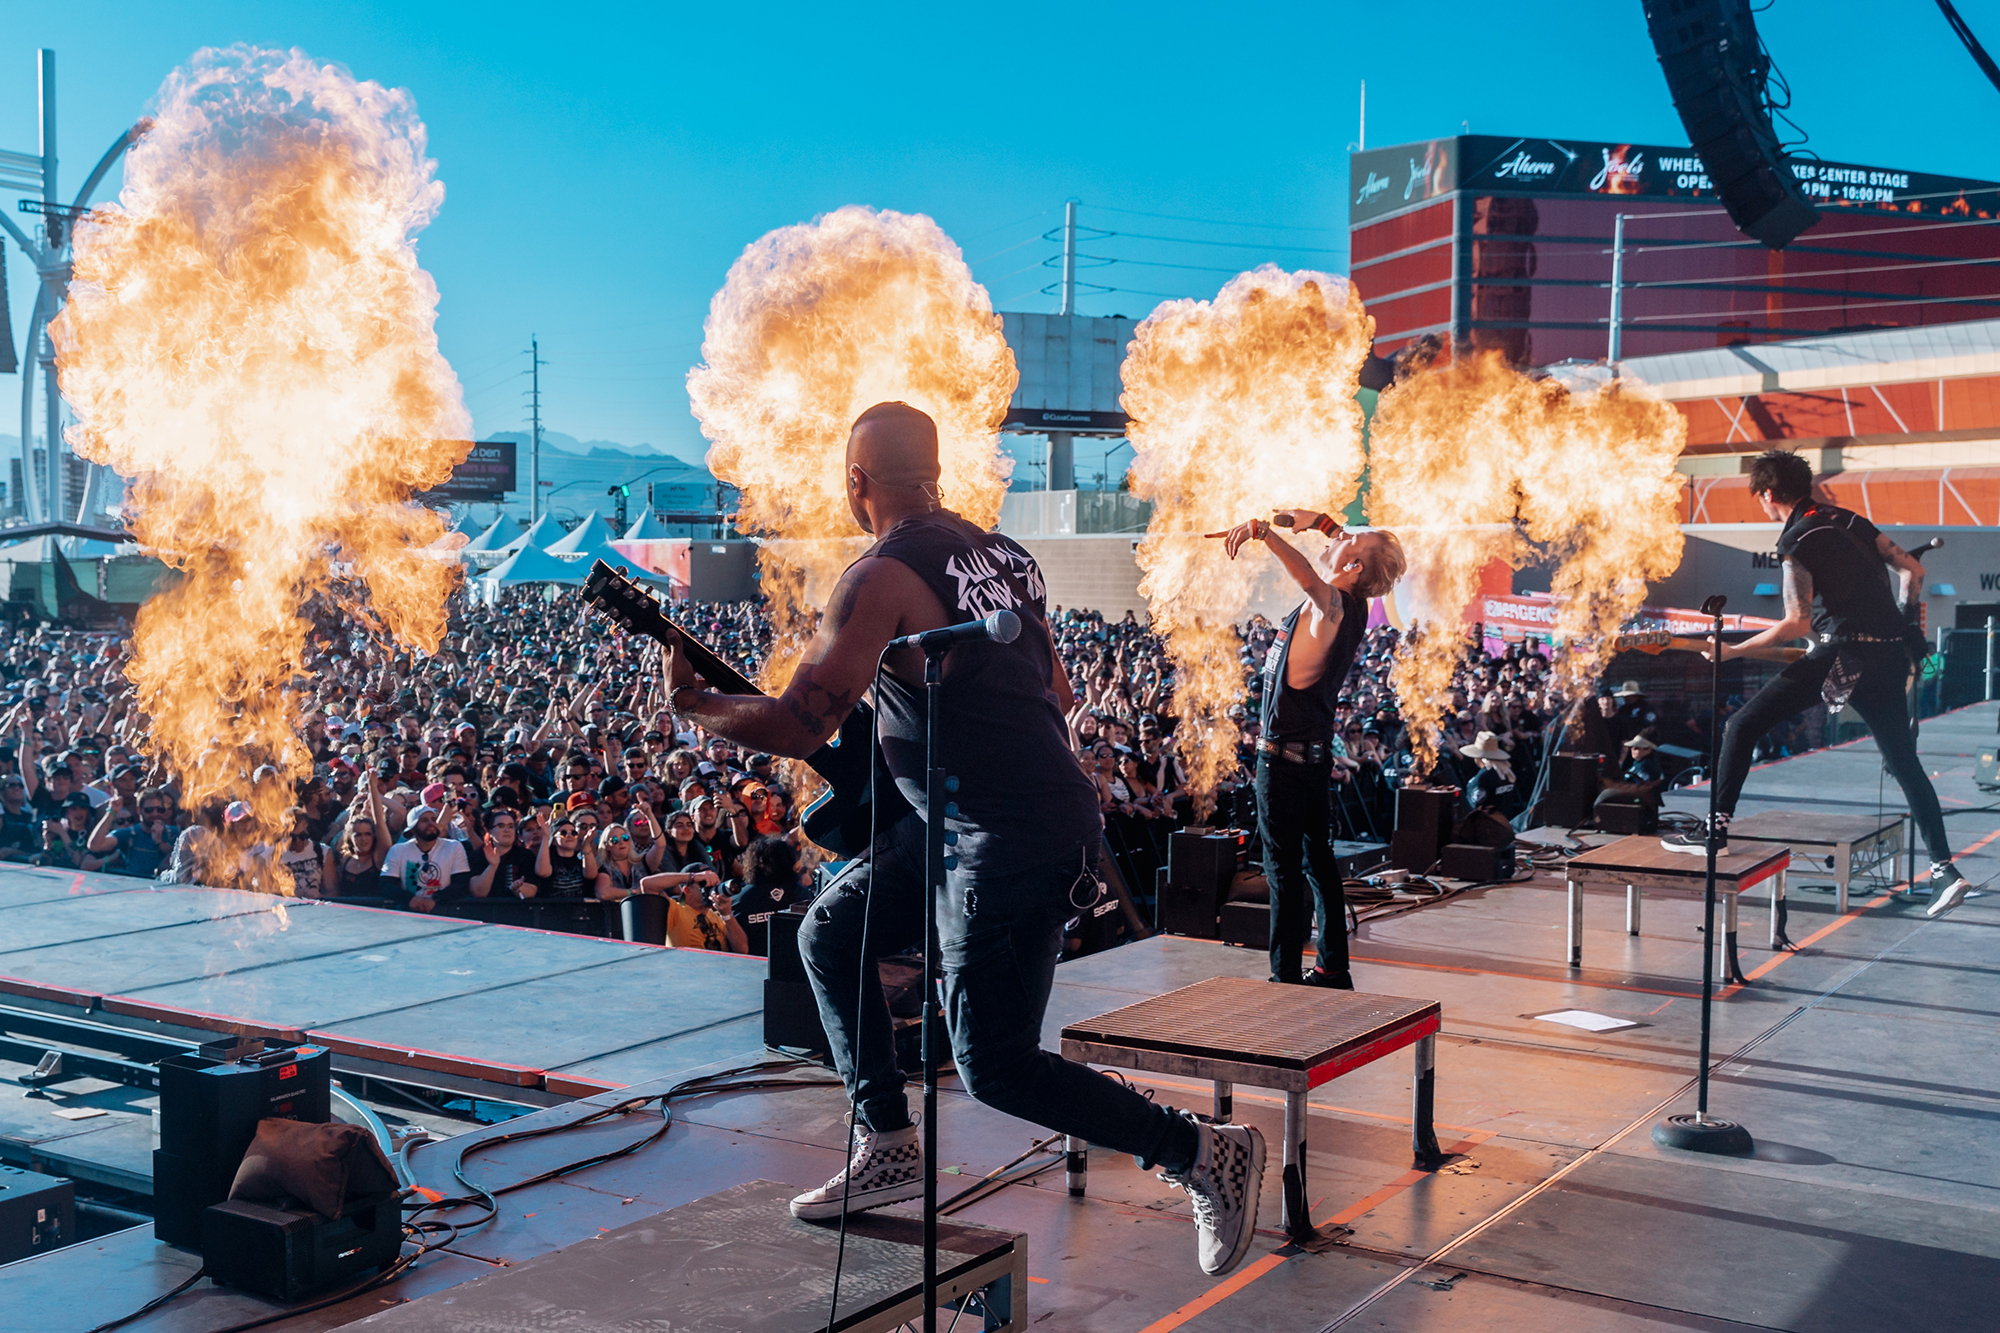 Sum 41 to bring farewell tour tour to Victoria [Video]